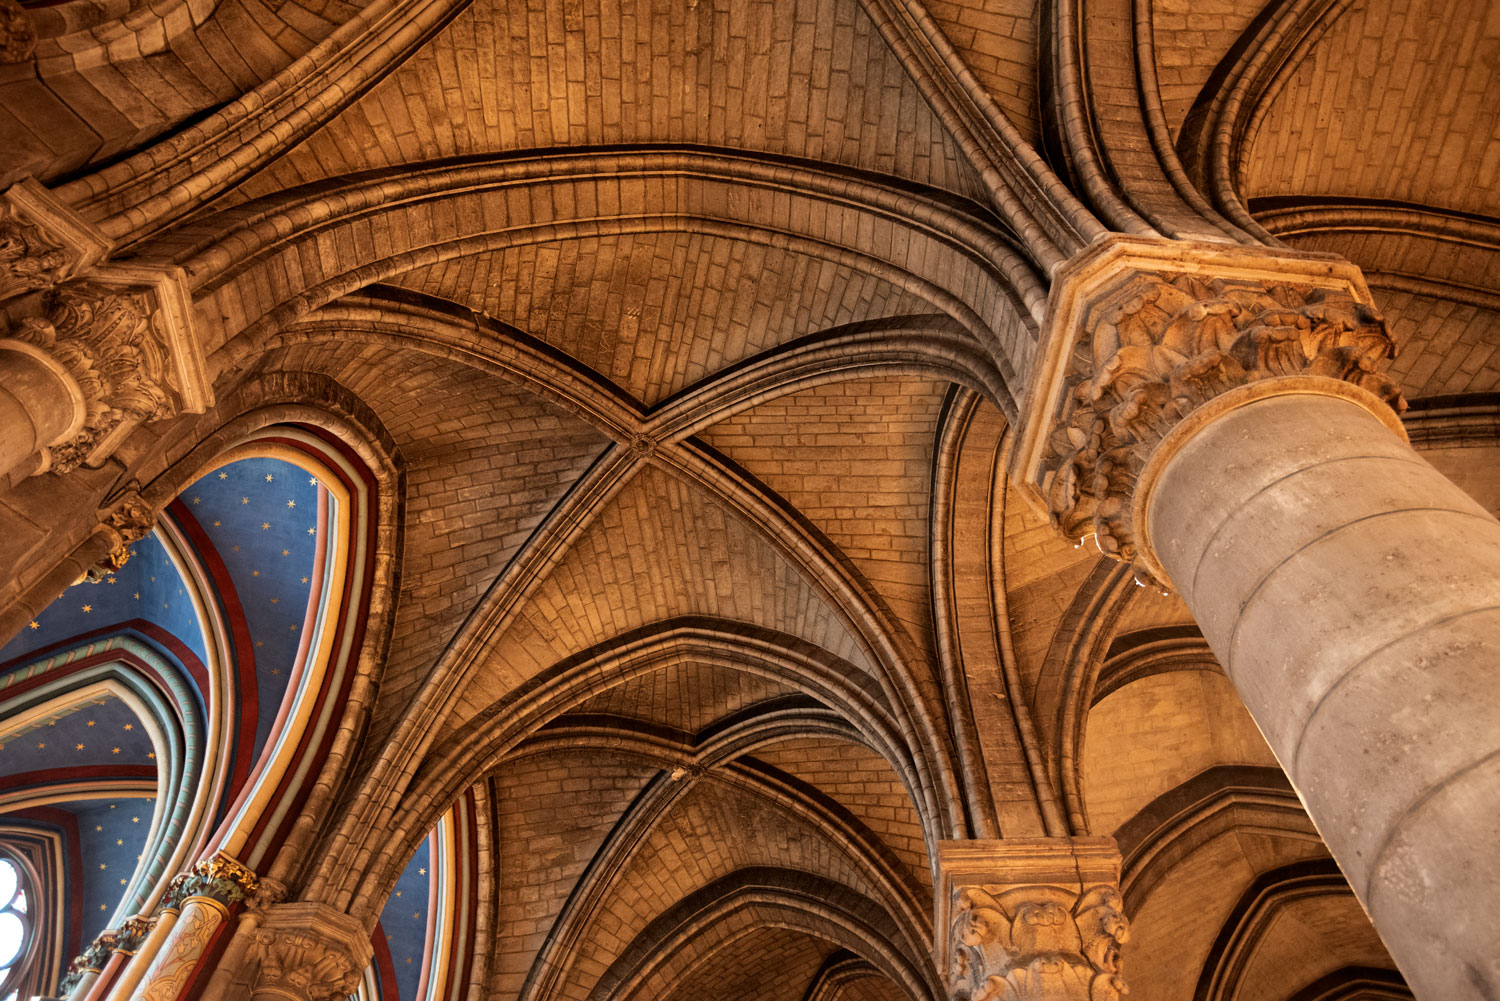 Gothic Architecture - Imagining Infinity